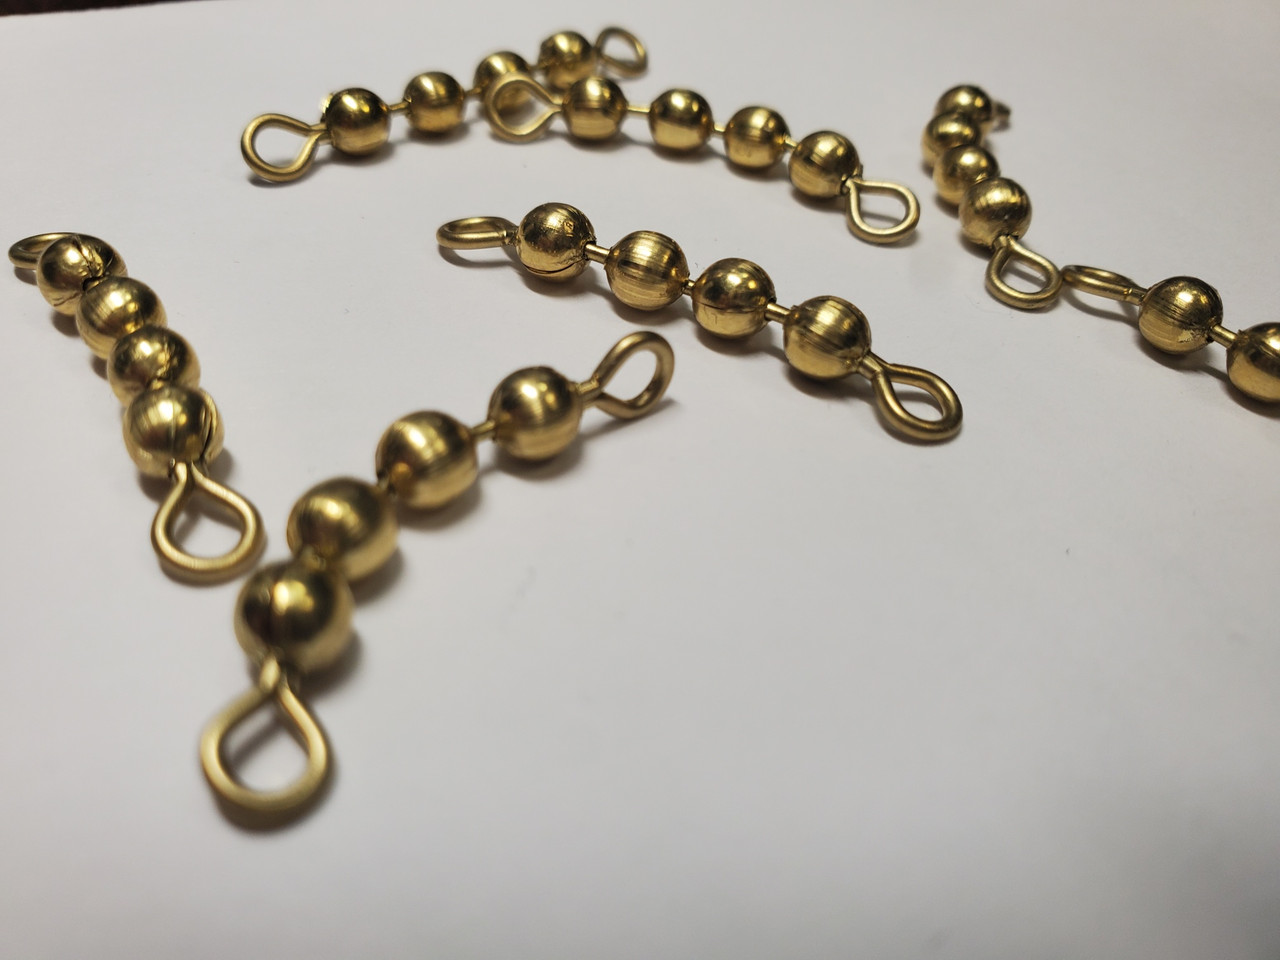 10 Yellow Brass Ball Chain Fishing Swivels - 4 Ball Length - Ball Chain  Manufacturing